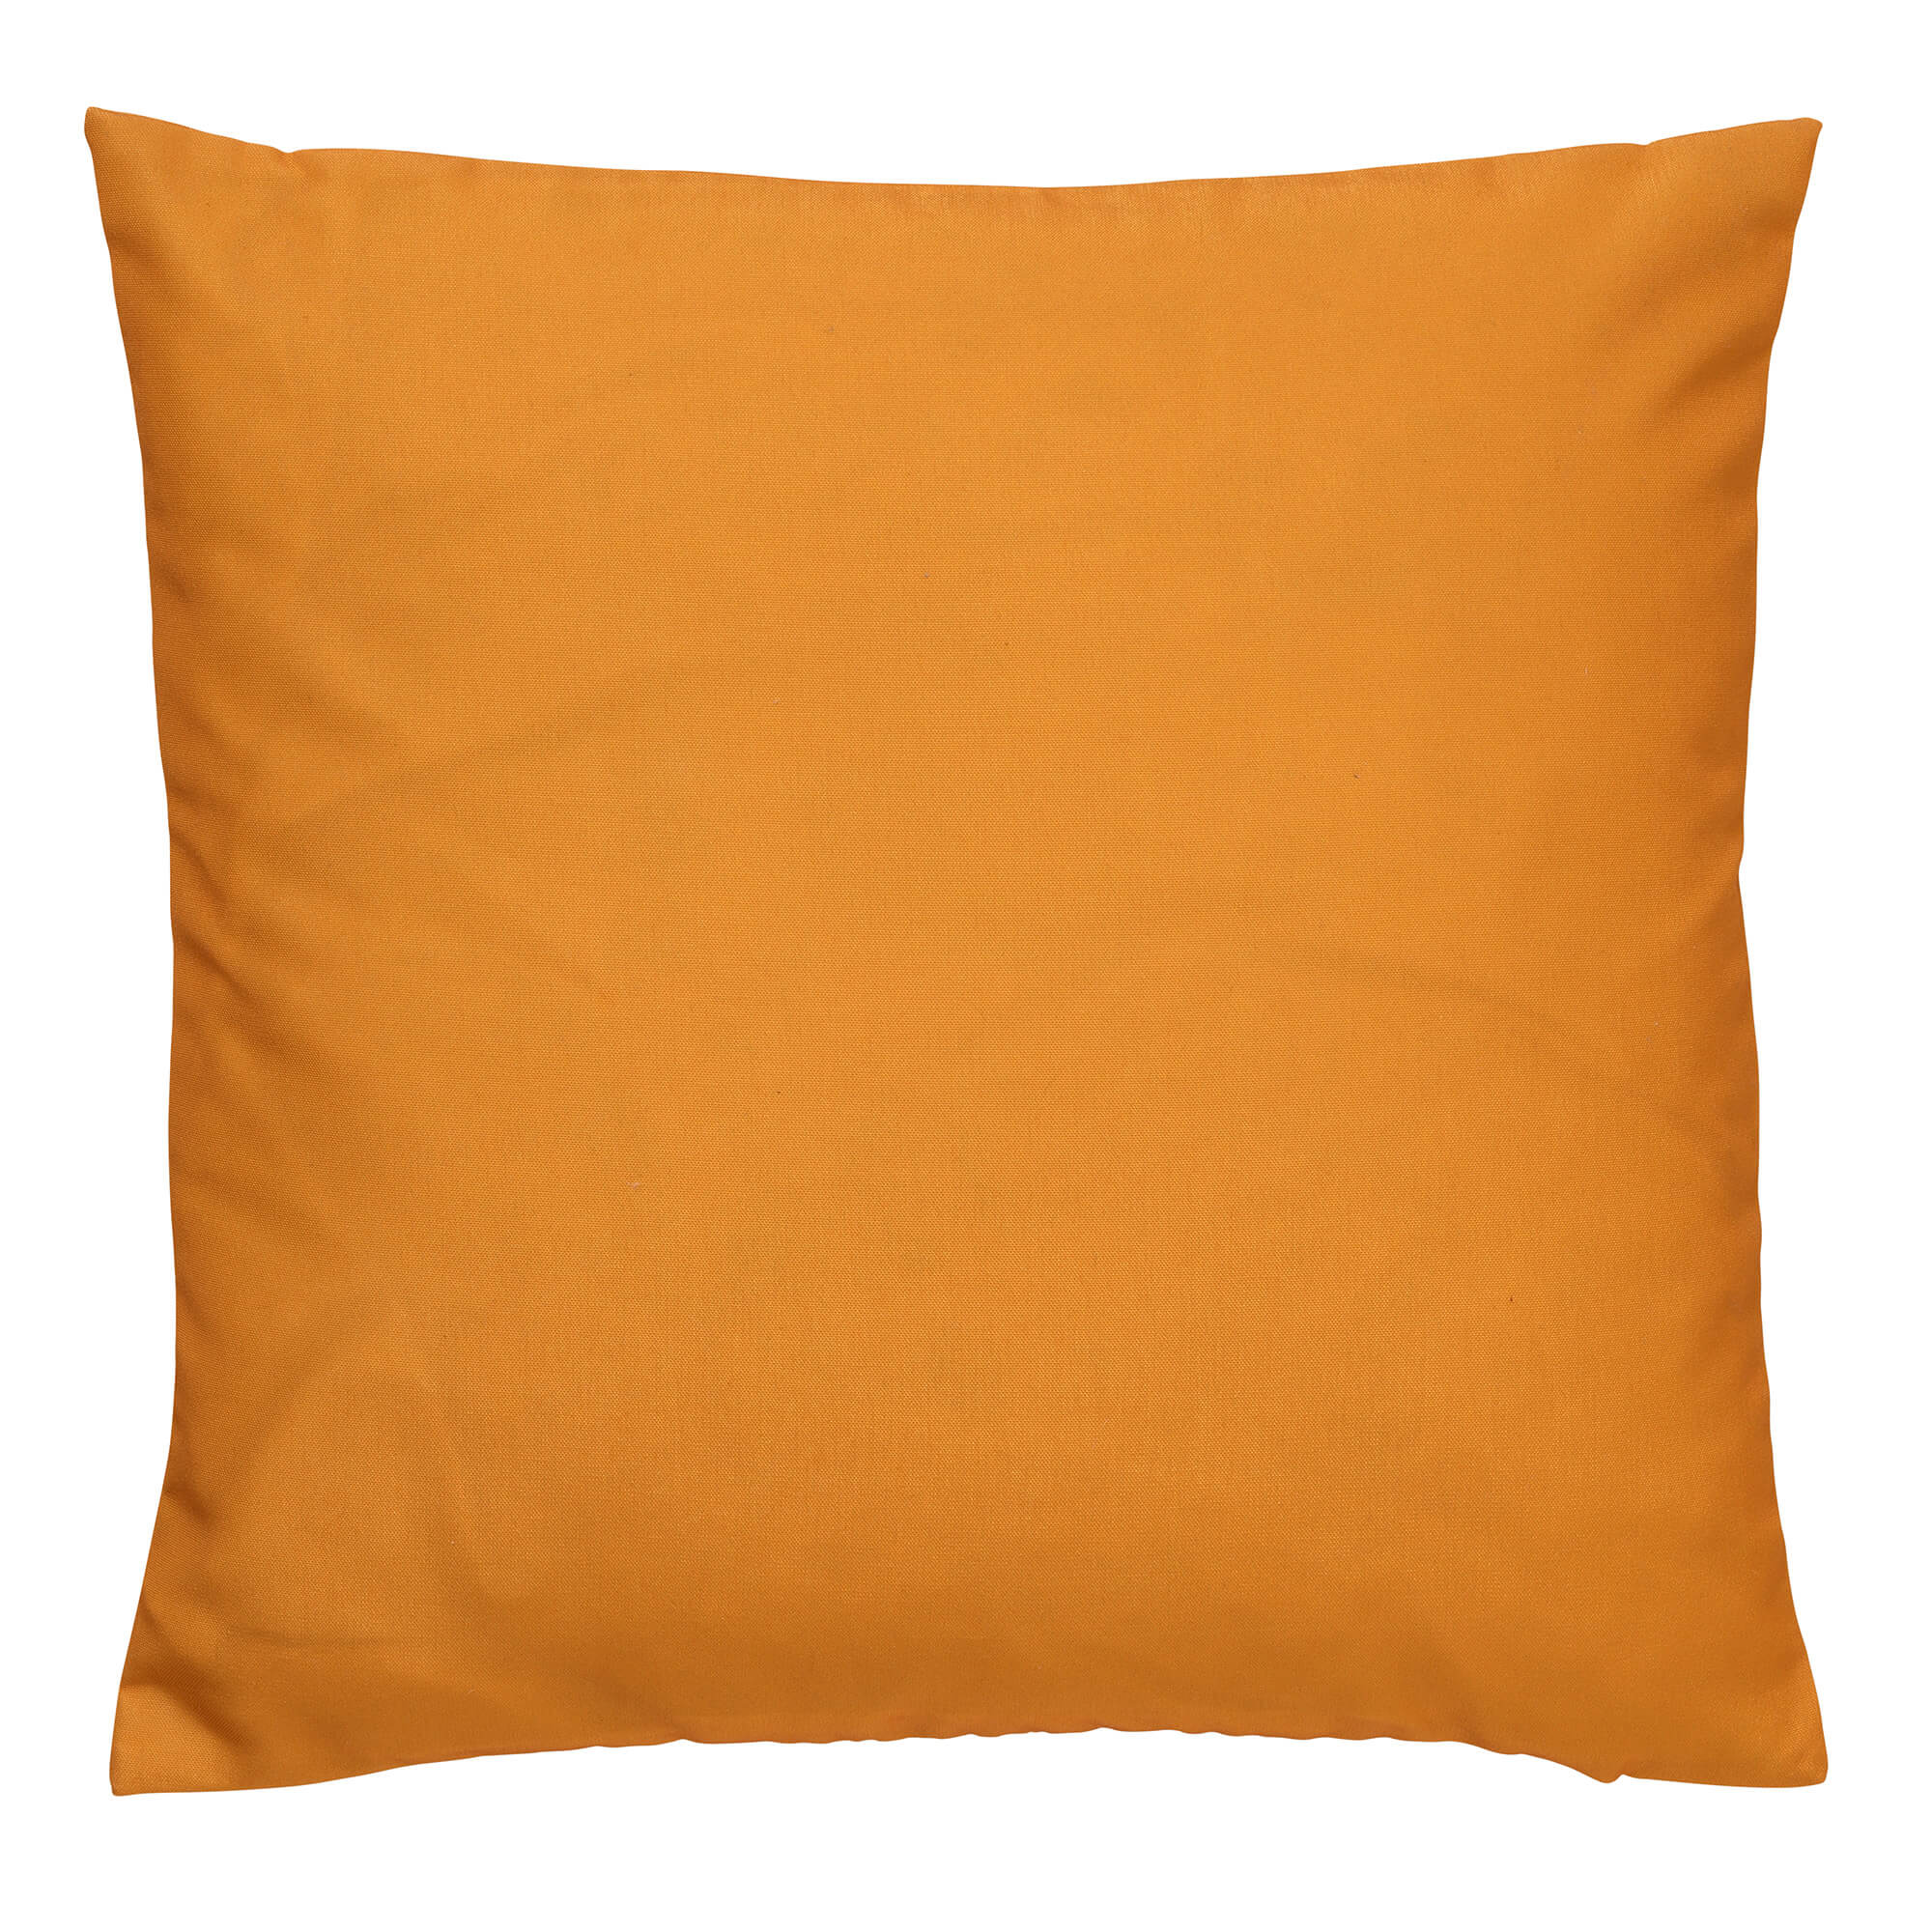 SANTORINI - Outdoor Cushion 45x45 cm - water-repellent and UV-resistant - Golden Glow - yellow-ochre